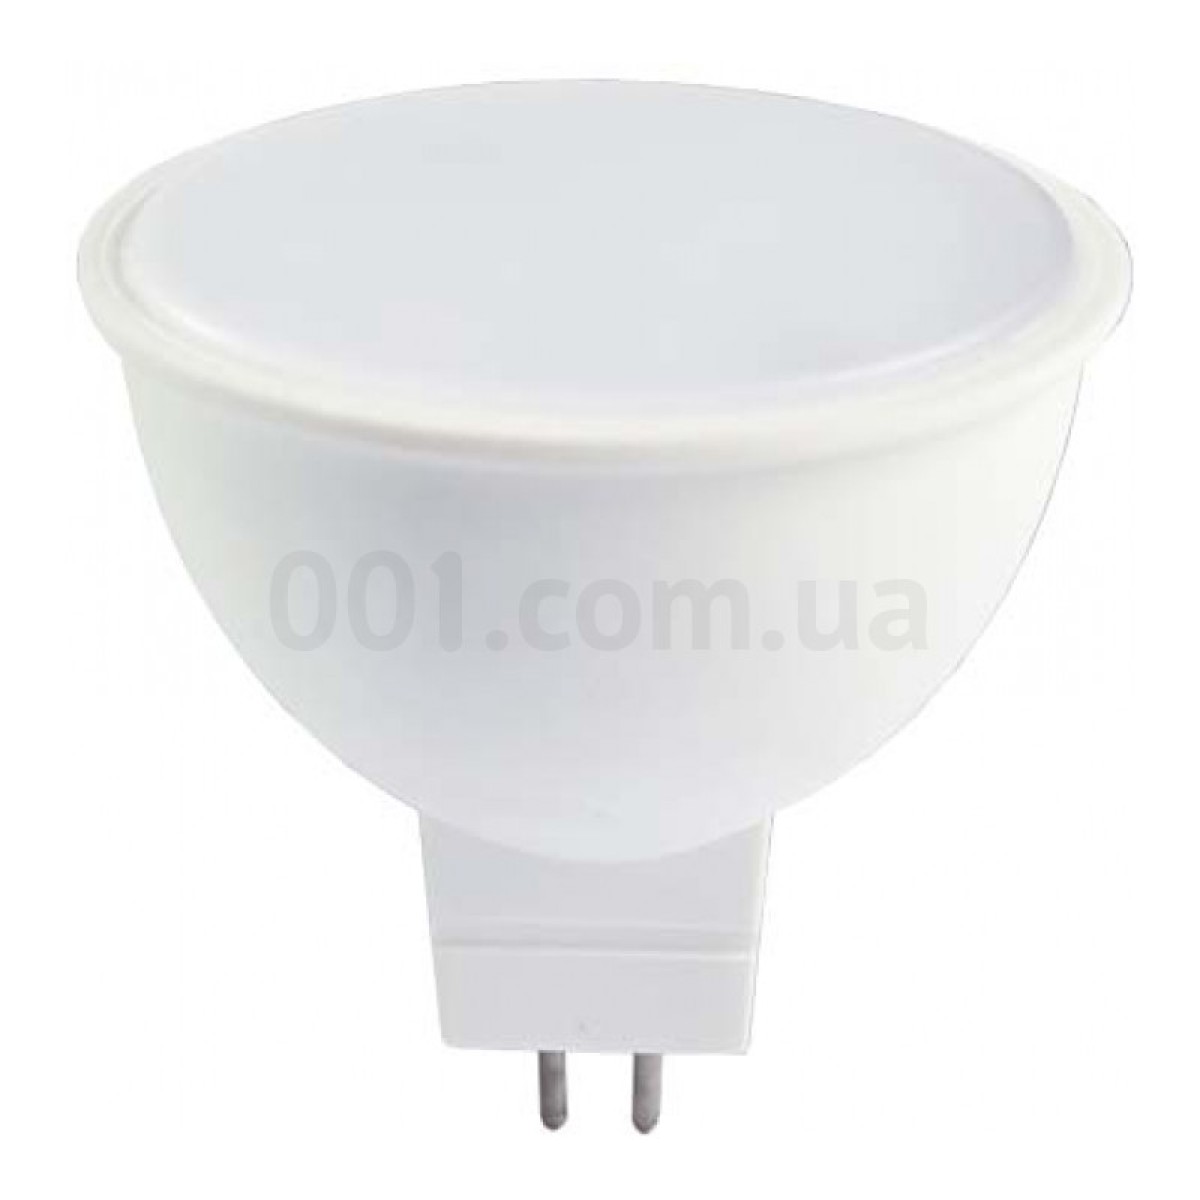 Светодиодная лампа LB-716 MR16 6Вт 4000K G5.3, Feron 256_256.jpg